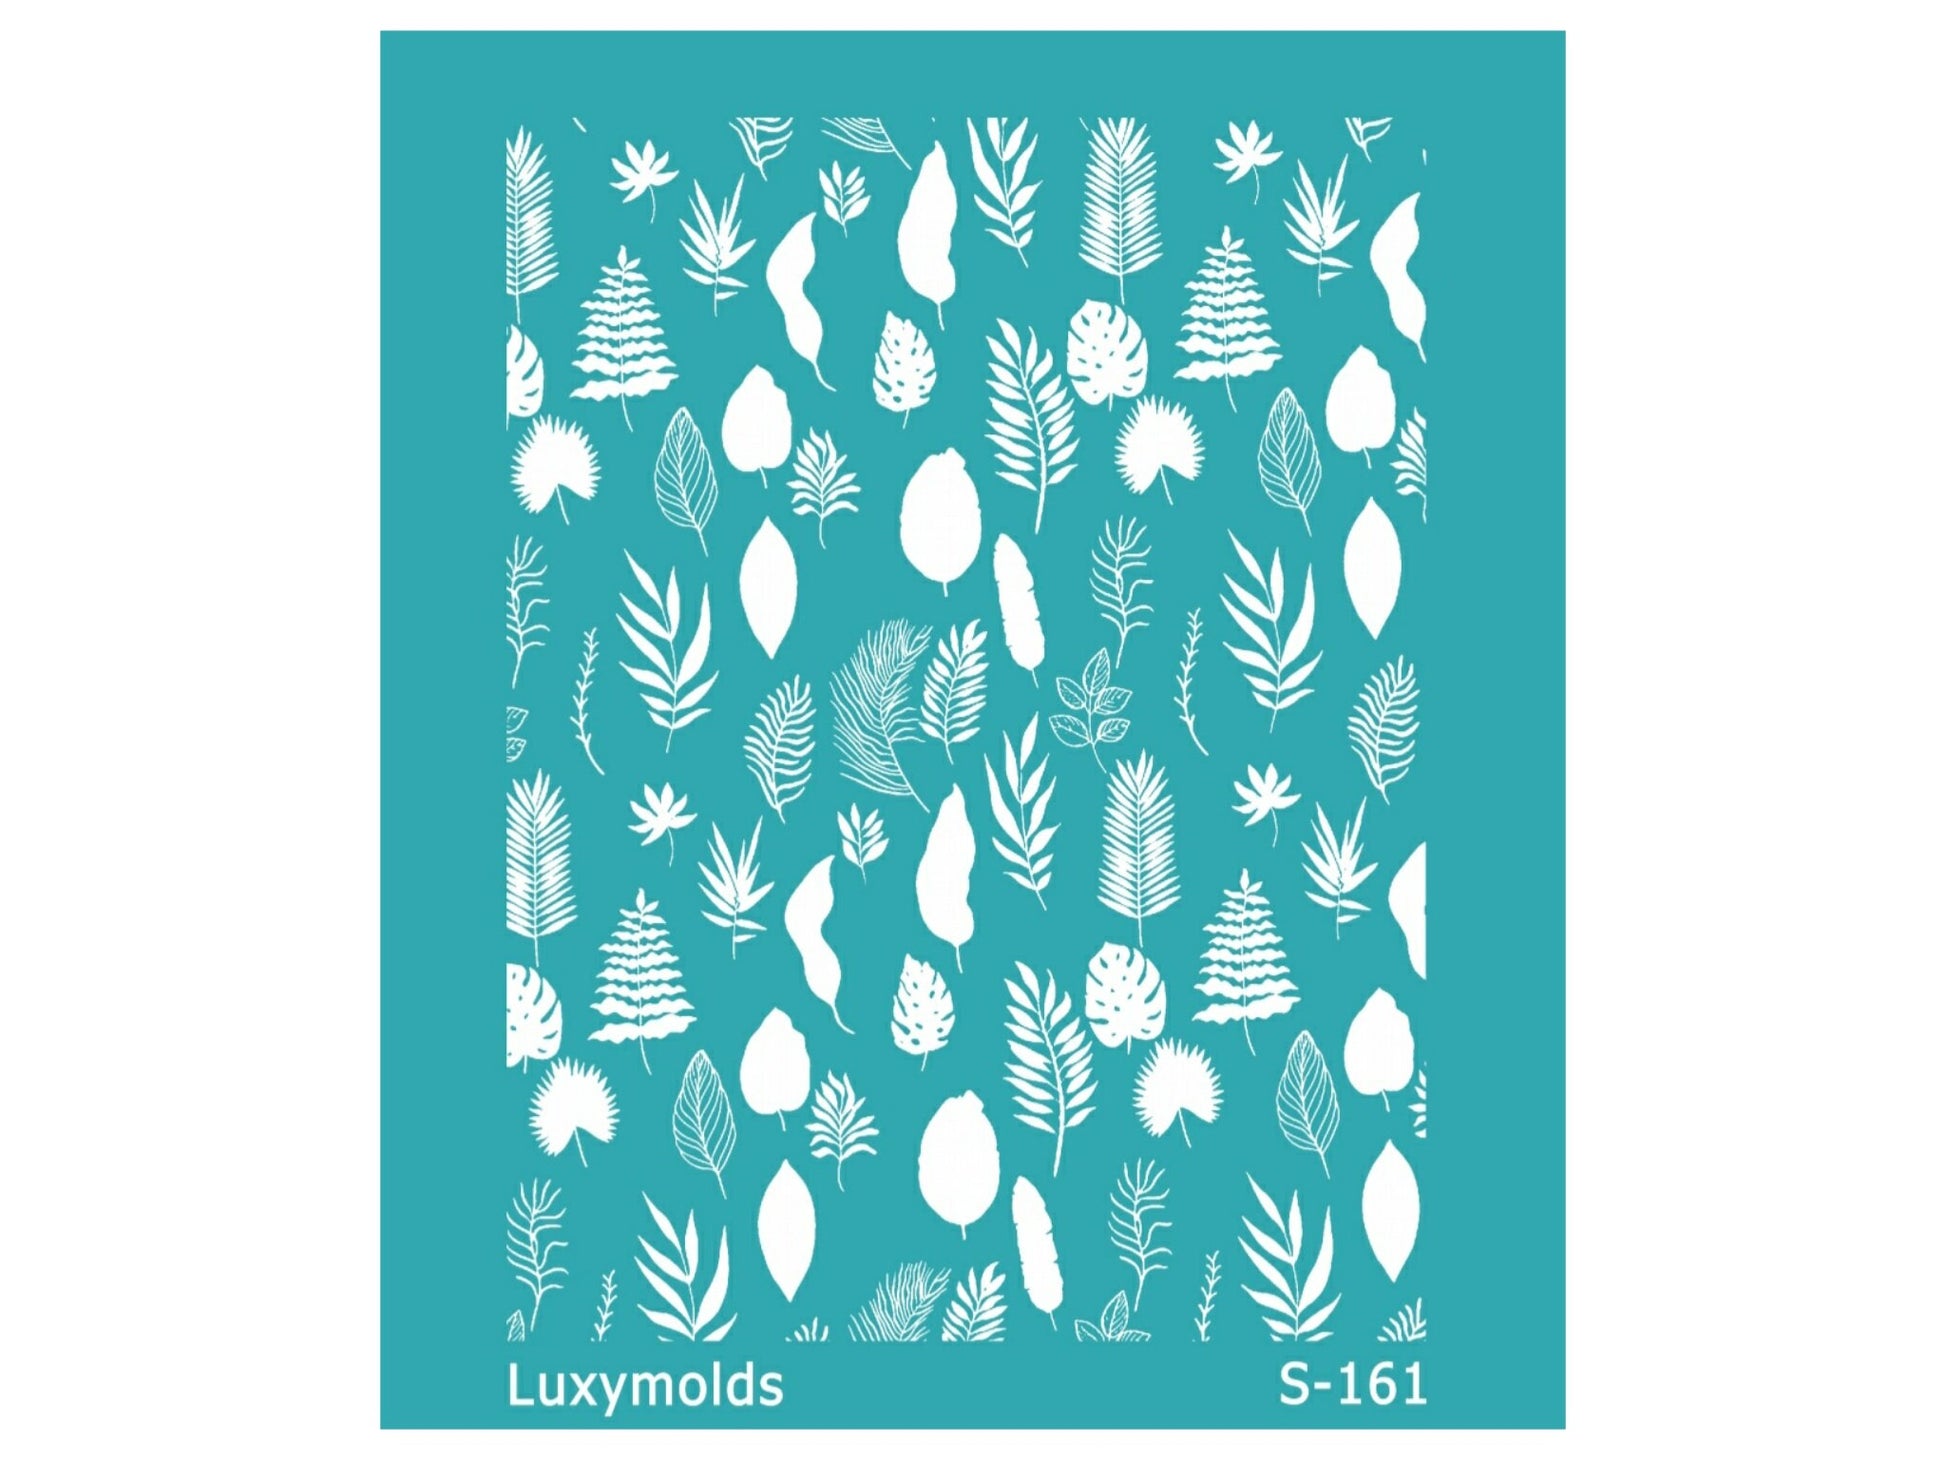 Silk screen stencil for polymer clay "Luxymolds" S-161